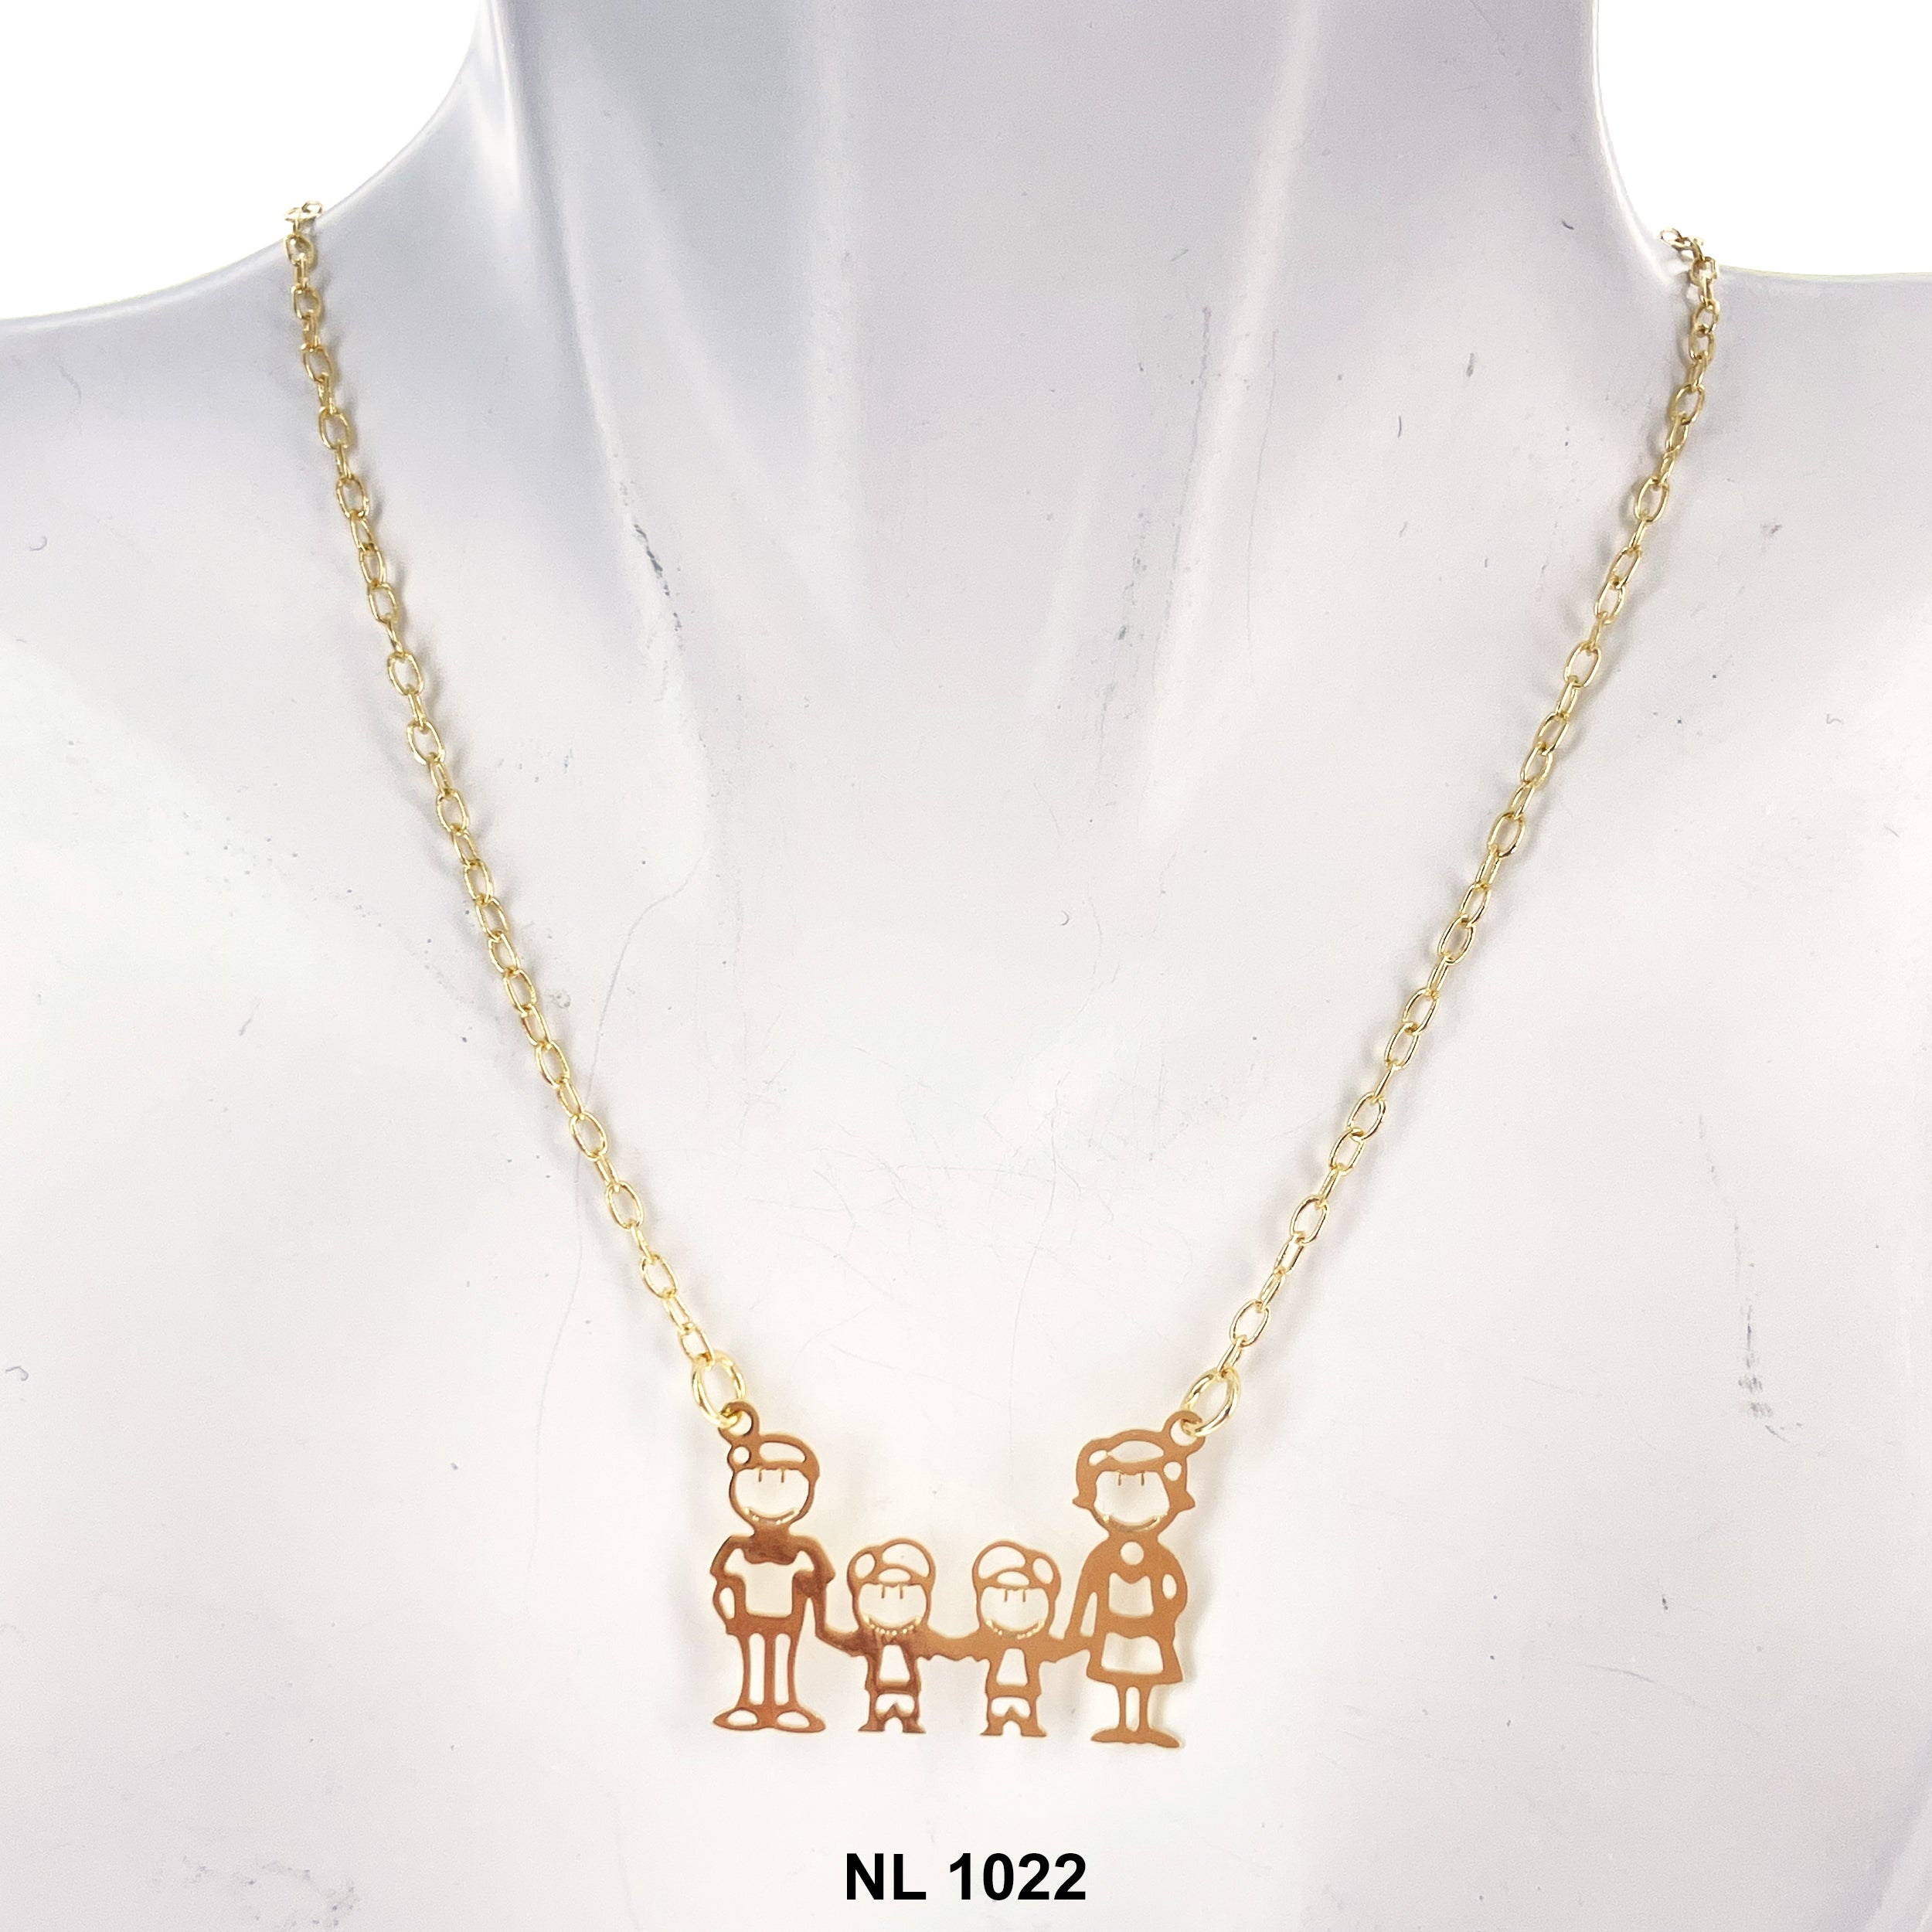 Family Necklace Set NL 1022